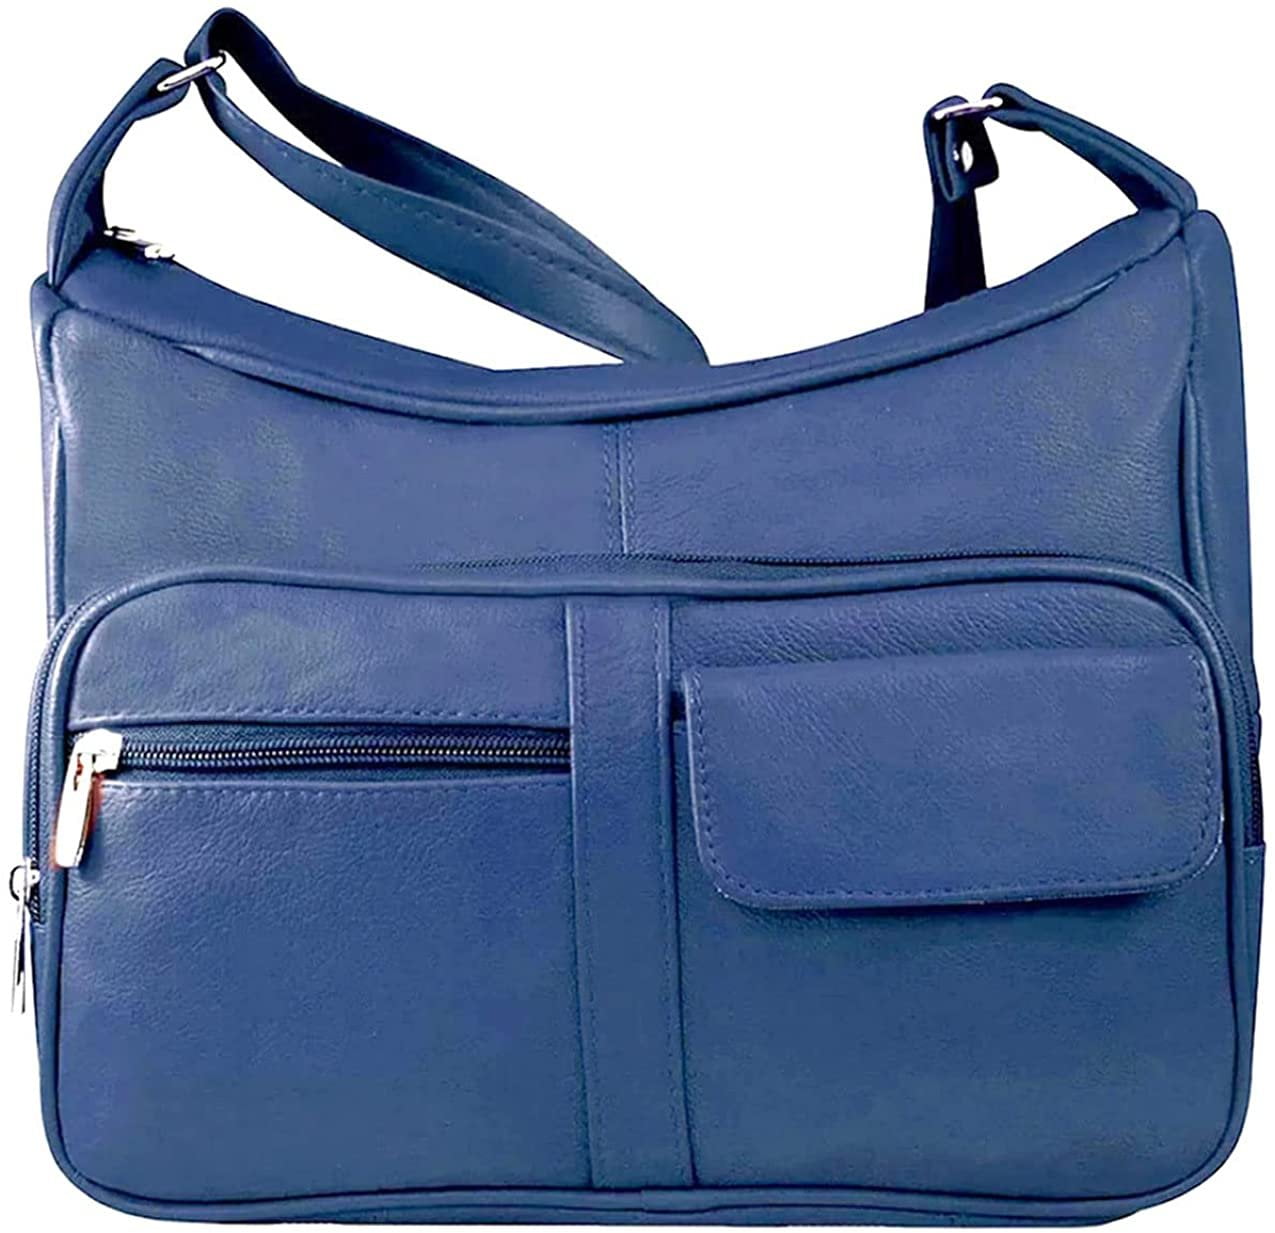 Womens Cross Body Shoulder Bag Blue Peacock Purse Satchel Messenger Handbag Tote 